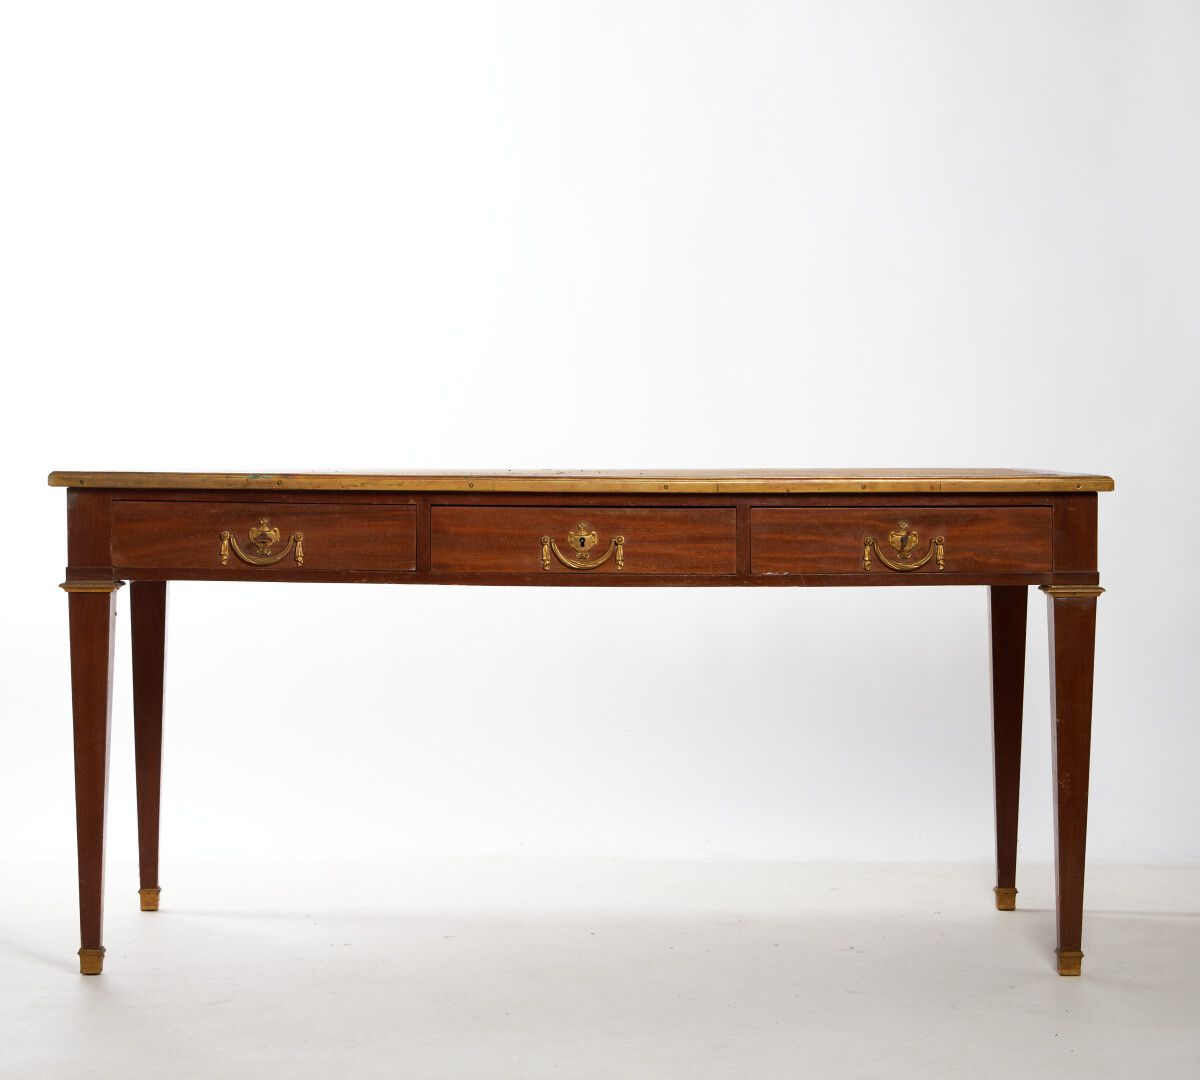 Null Large mahogany veneered flat desk

3 drawers in the belt, sheath feet

Loui&hellip;